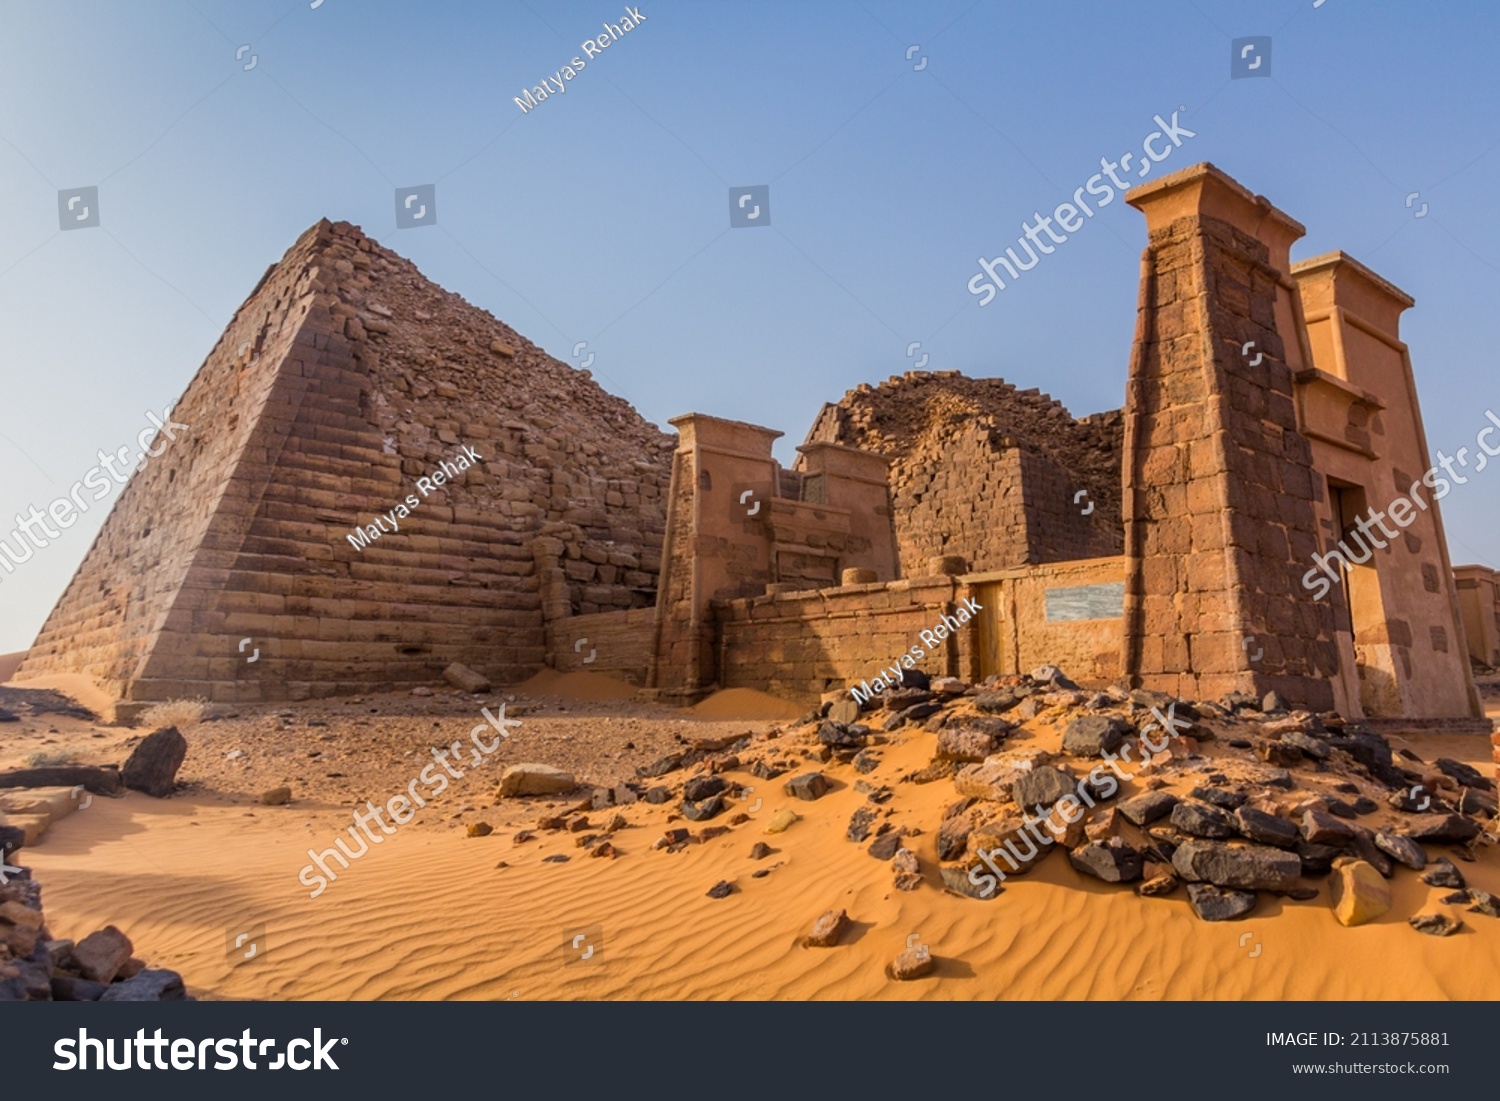 Meroe pyramids located in Sahara desert, Sudan #2113875881